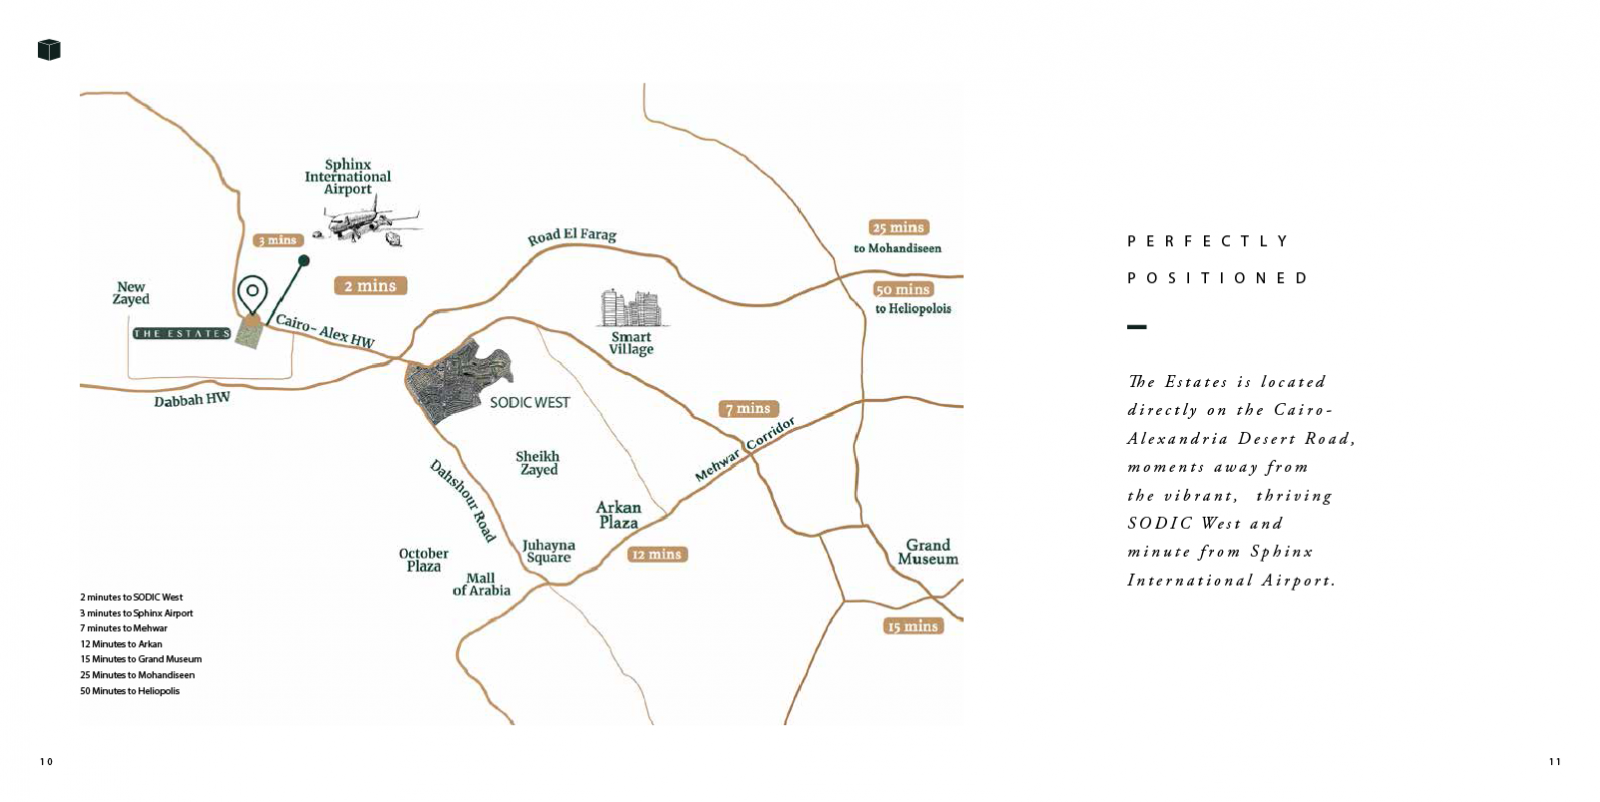 The Estates New Zayed – The Estates Sodic